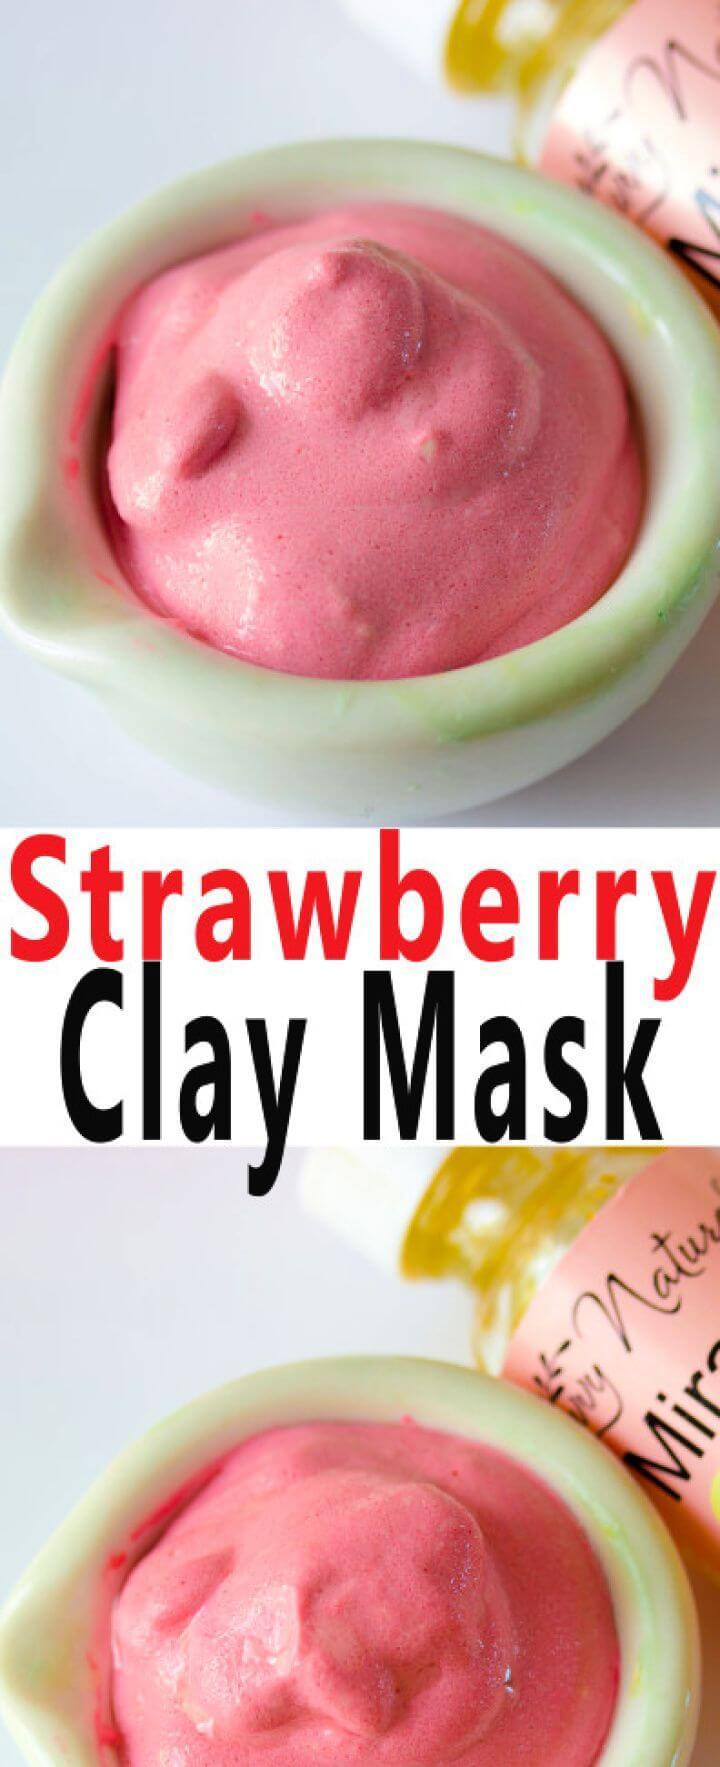 Strawberry Clay Mask